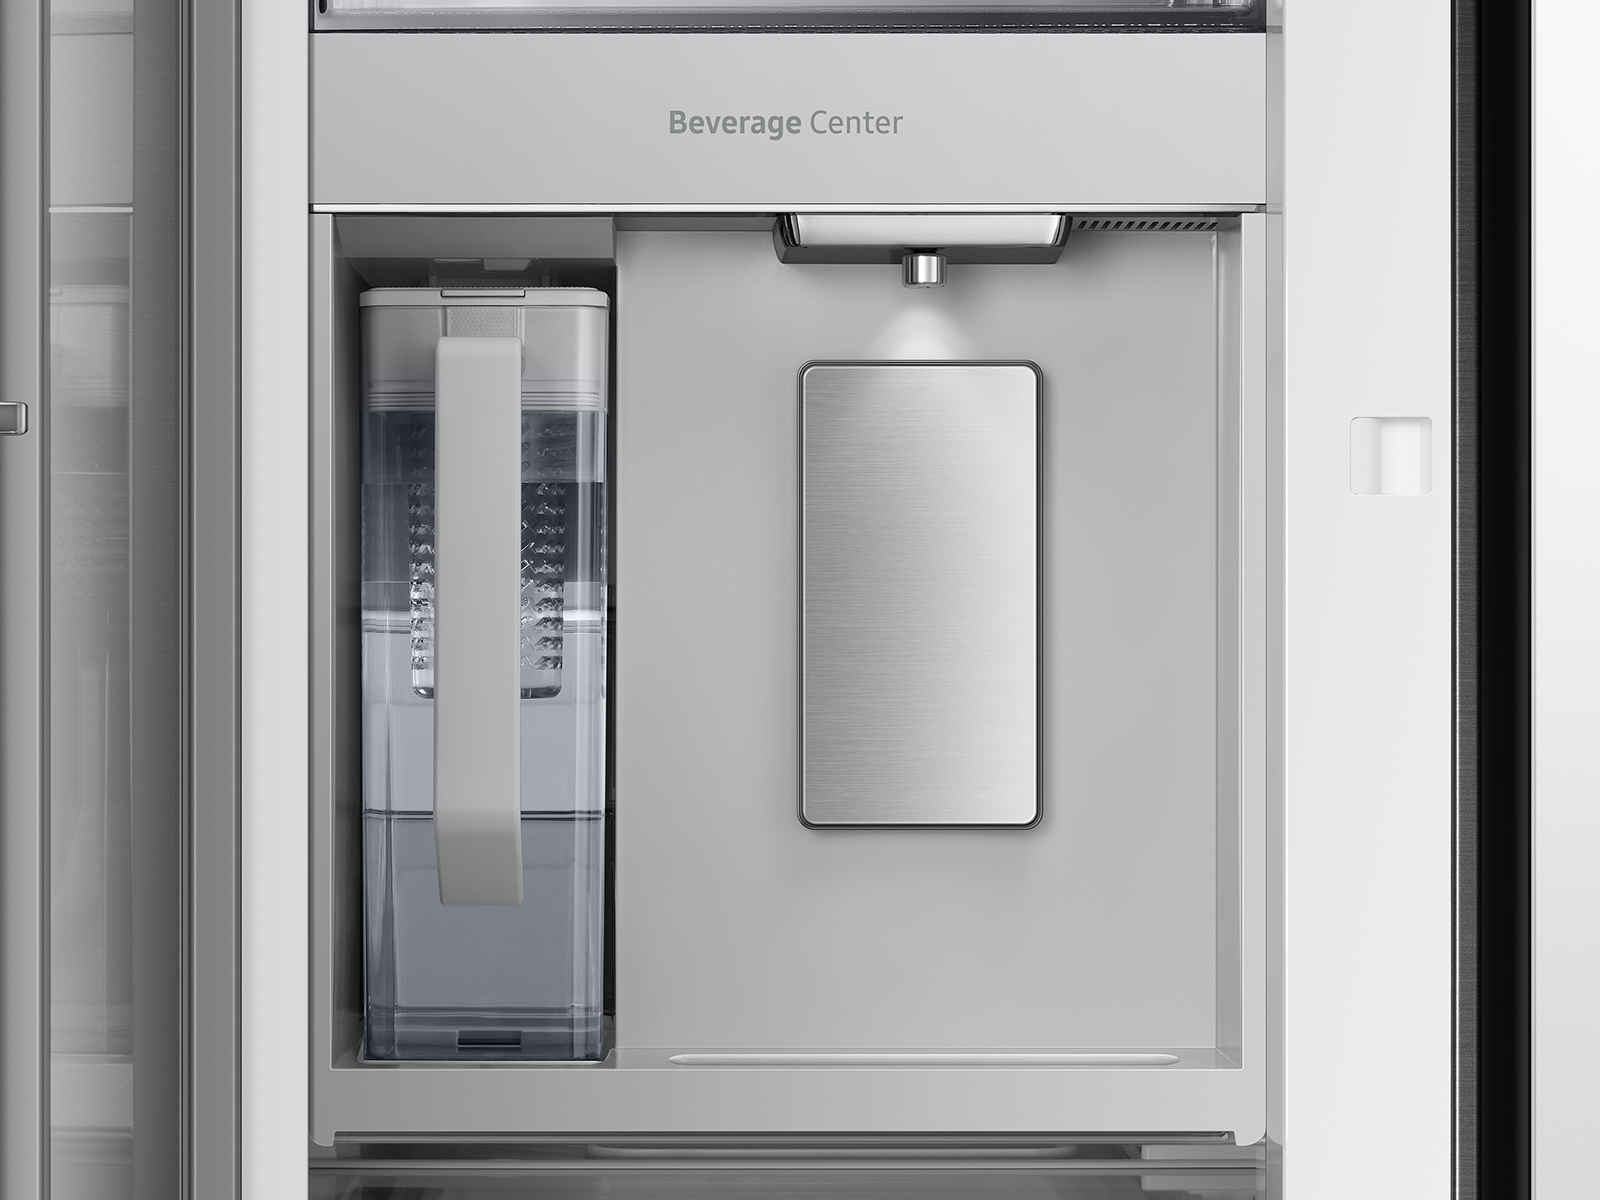 samsung refrigerator double door interior